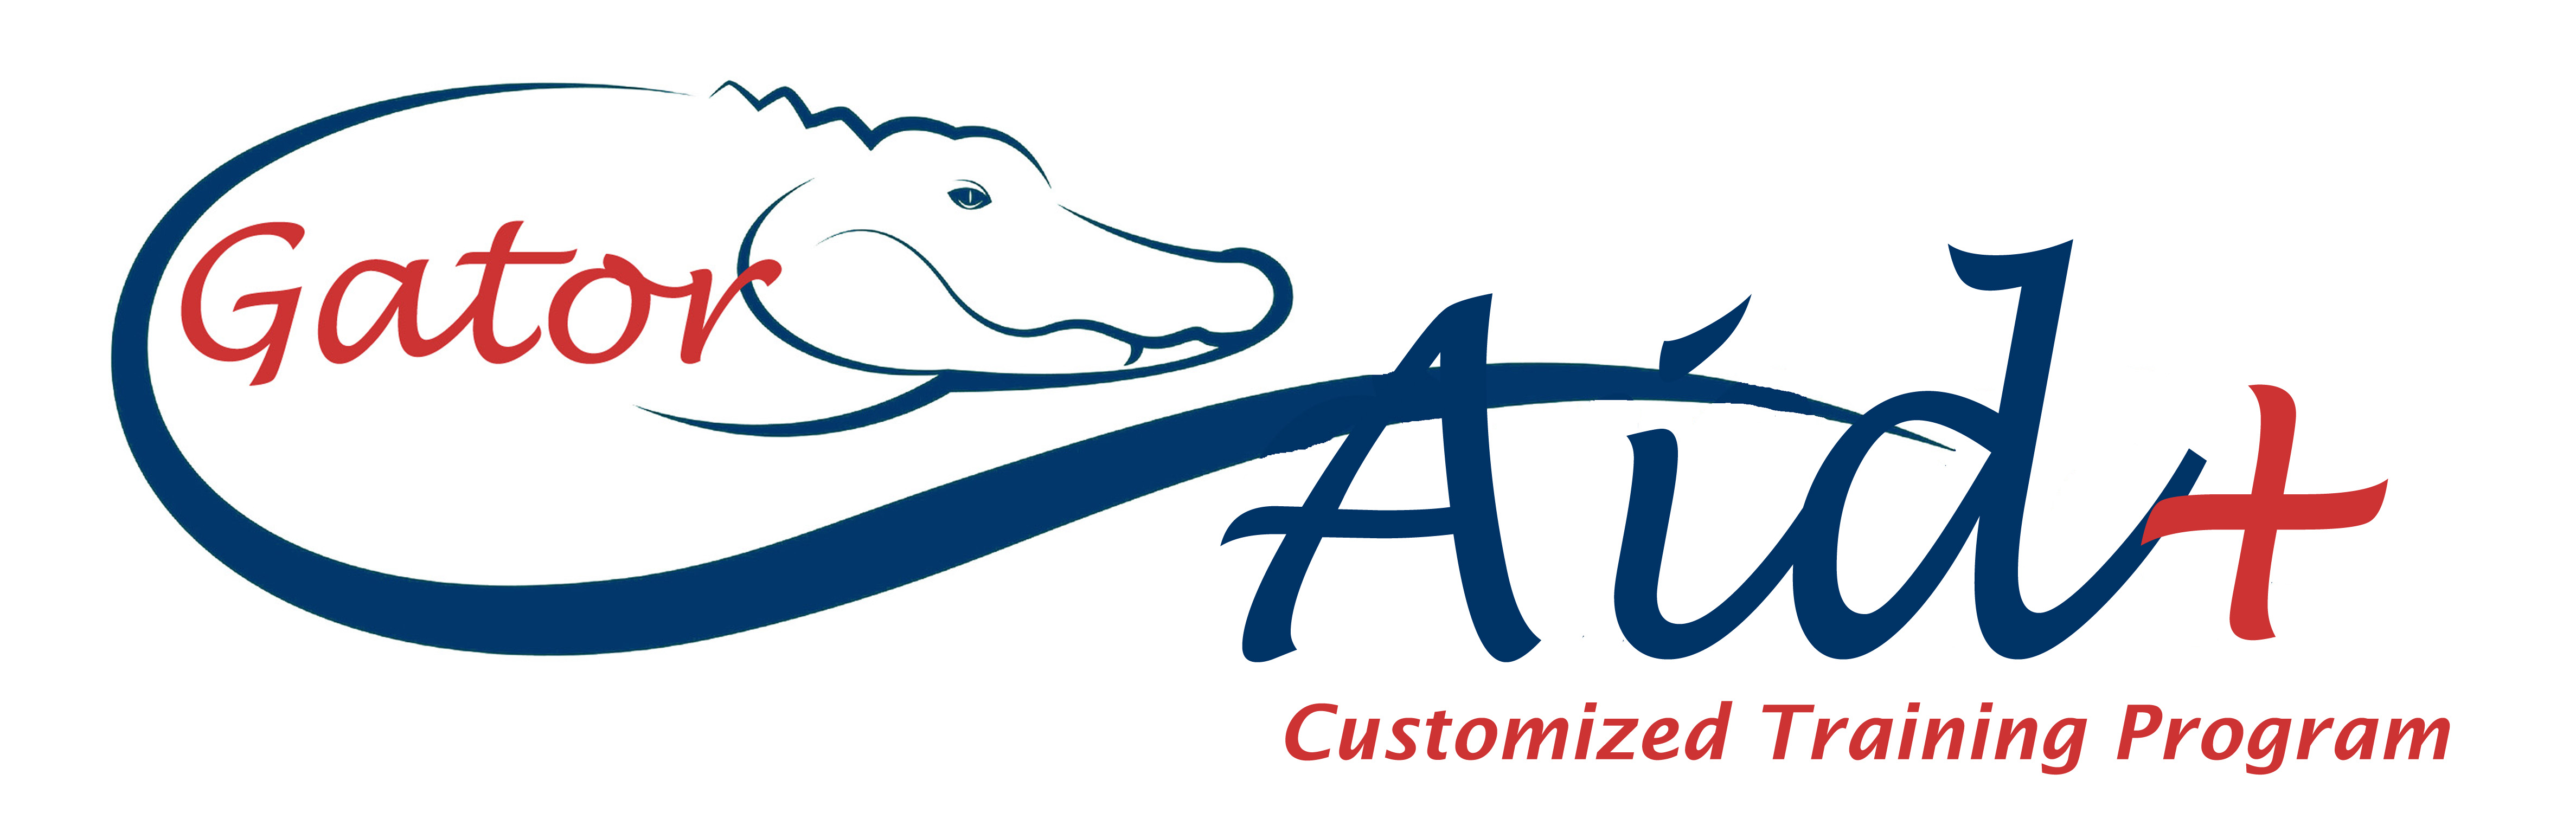 Gator Aid customized training program logo